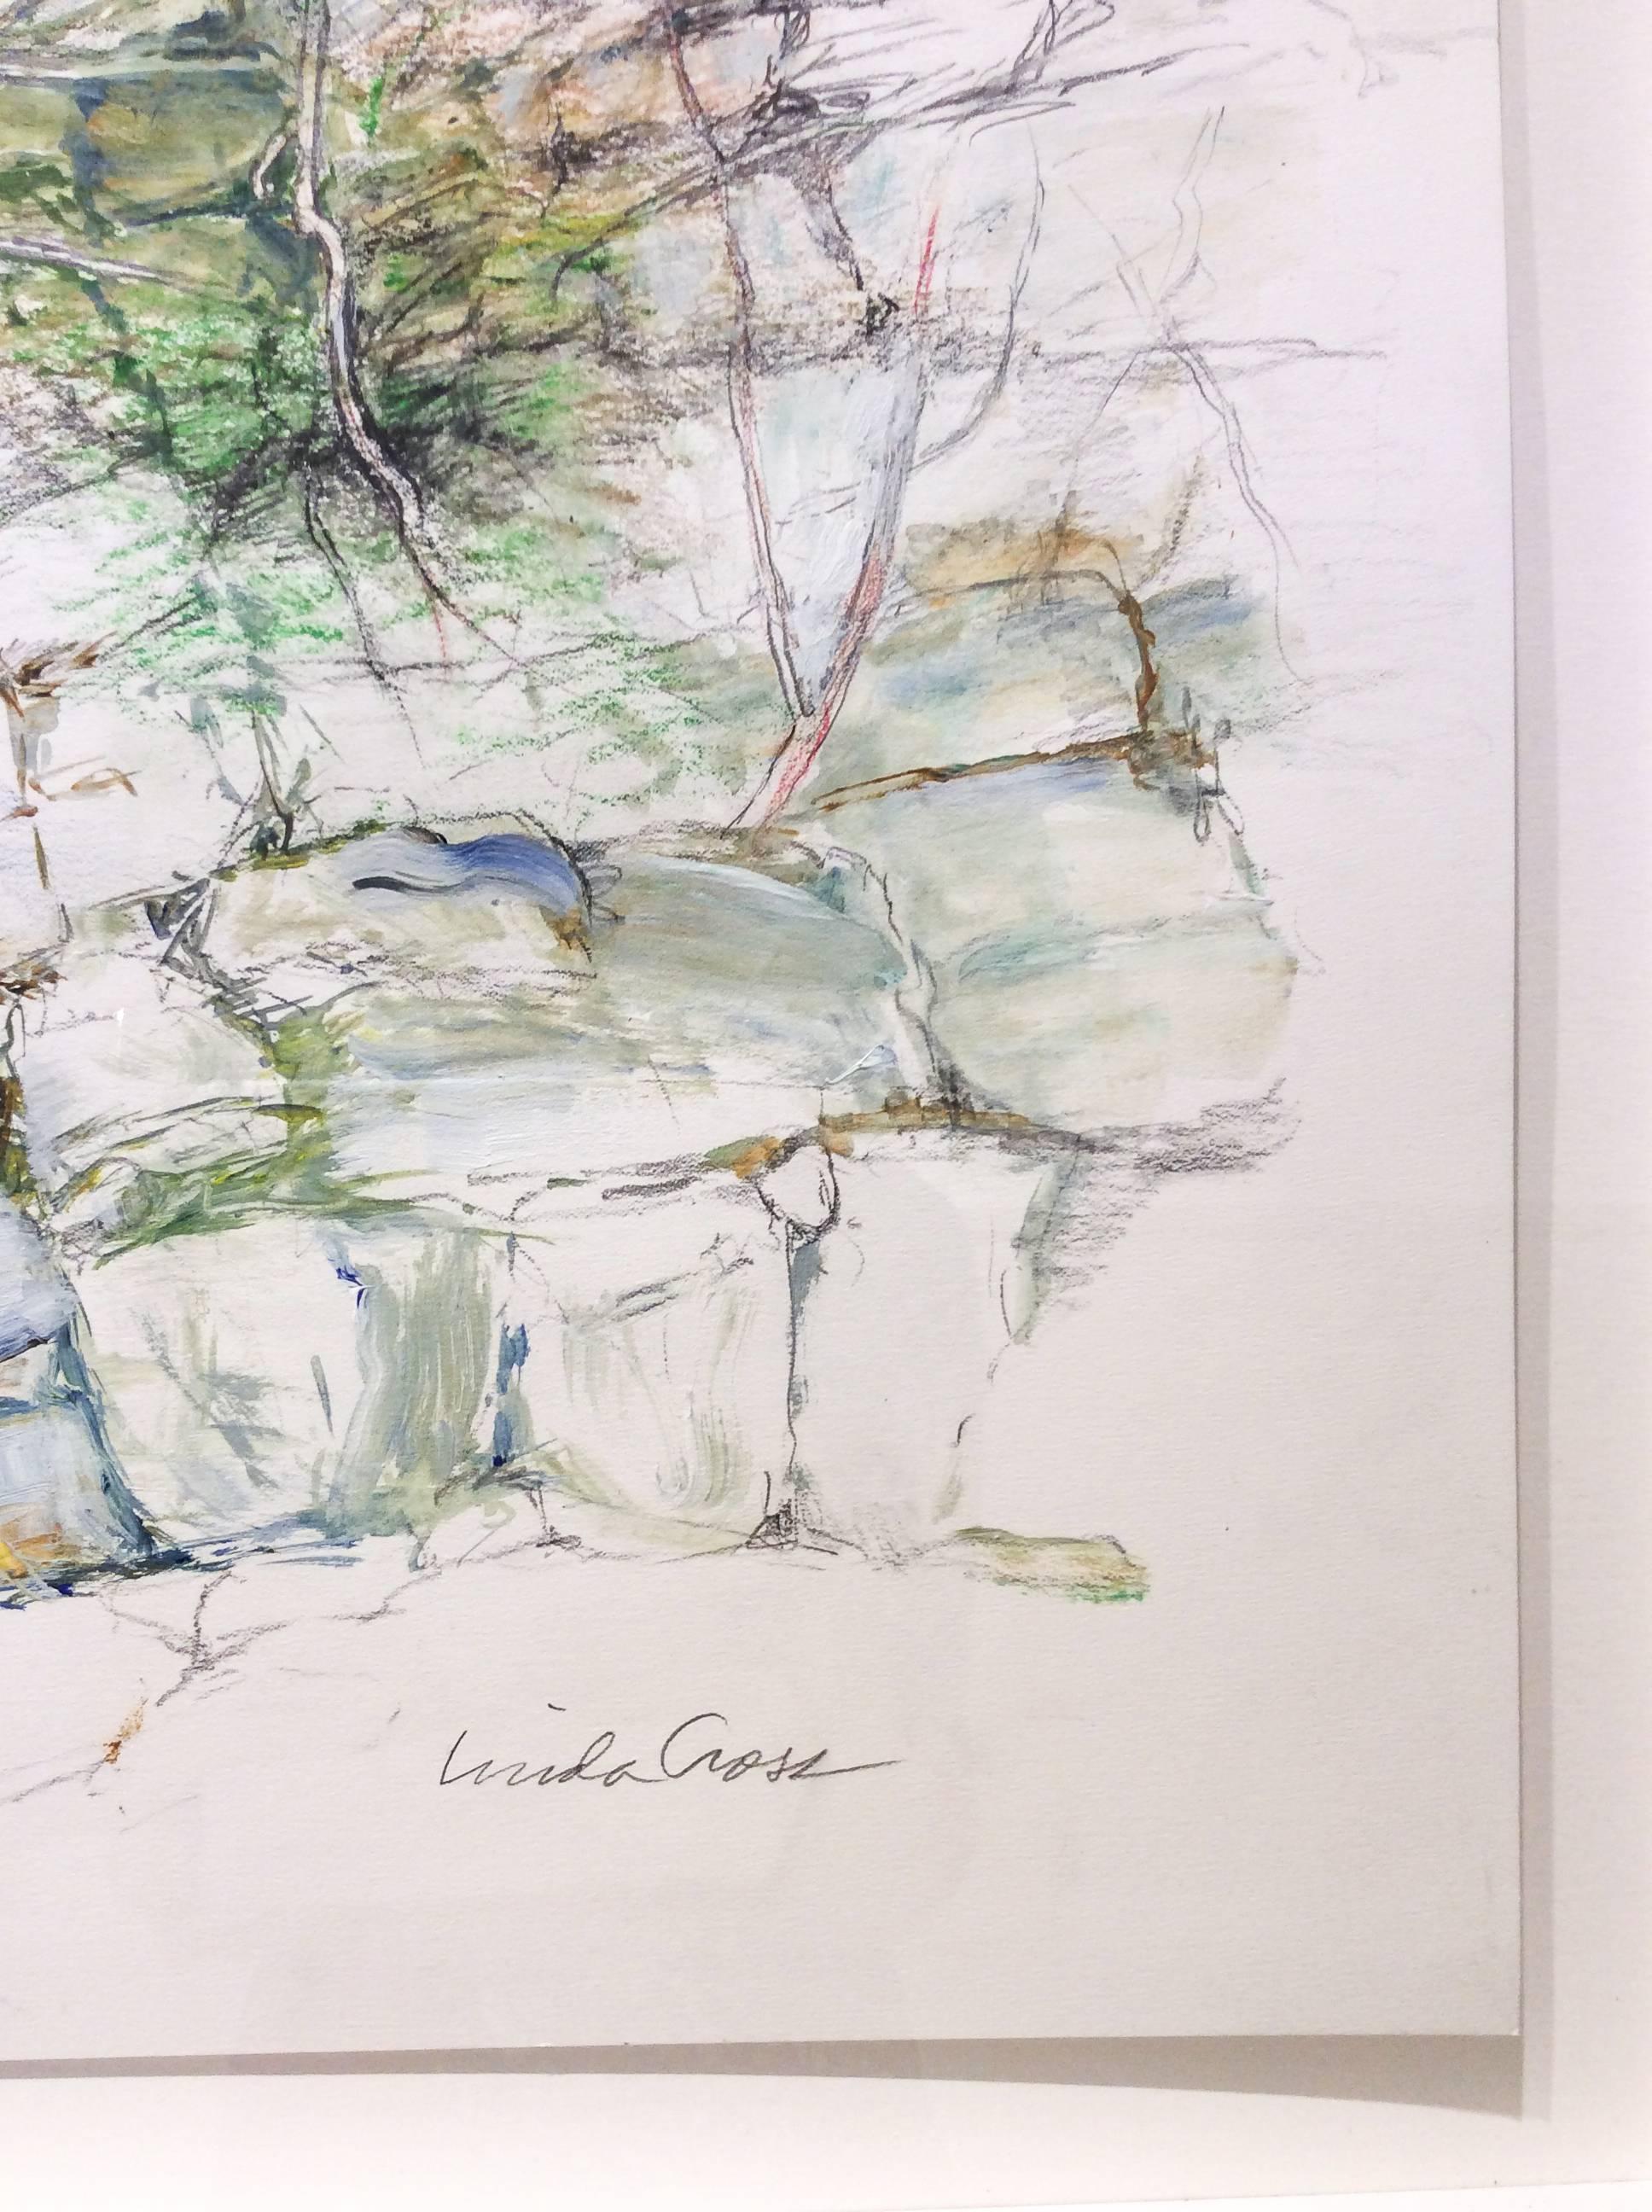 Thicket (Modern, Impressionistic Rock Landscape Drawing in Green Earth Tones) - Beige Landscape Art by Linda Cross